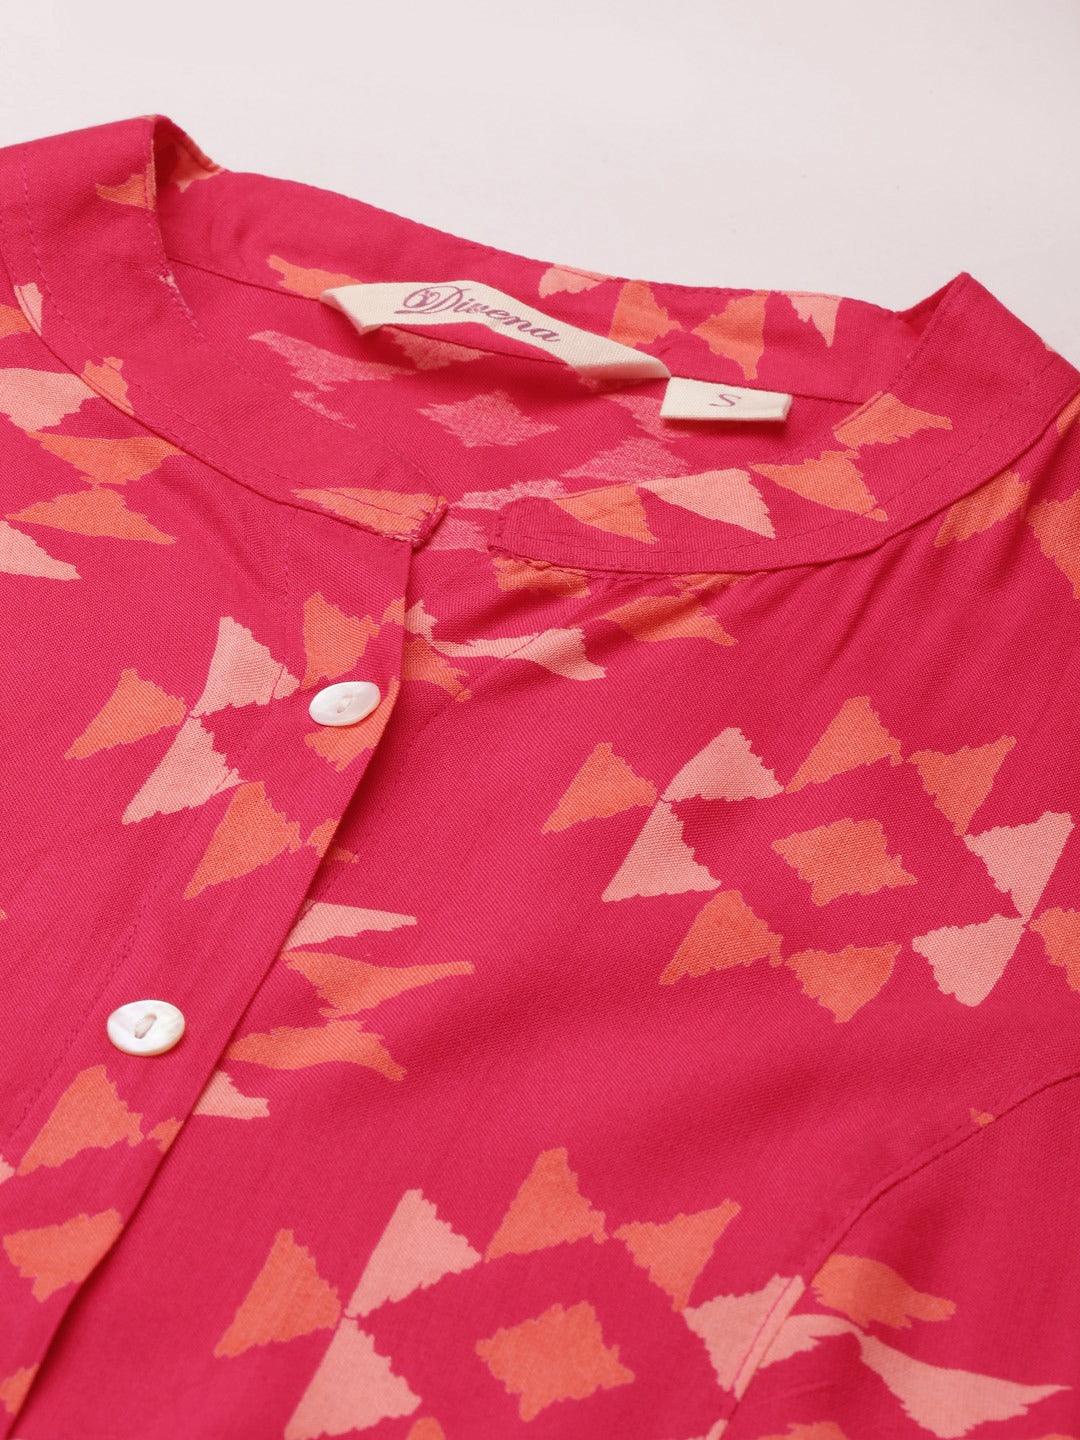 Divena Pink Geometric Print Rayon Shirt Style Top - divena world